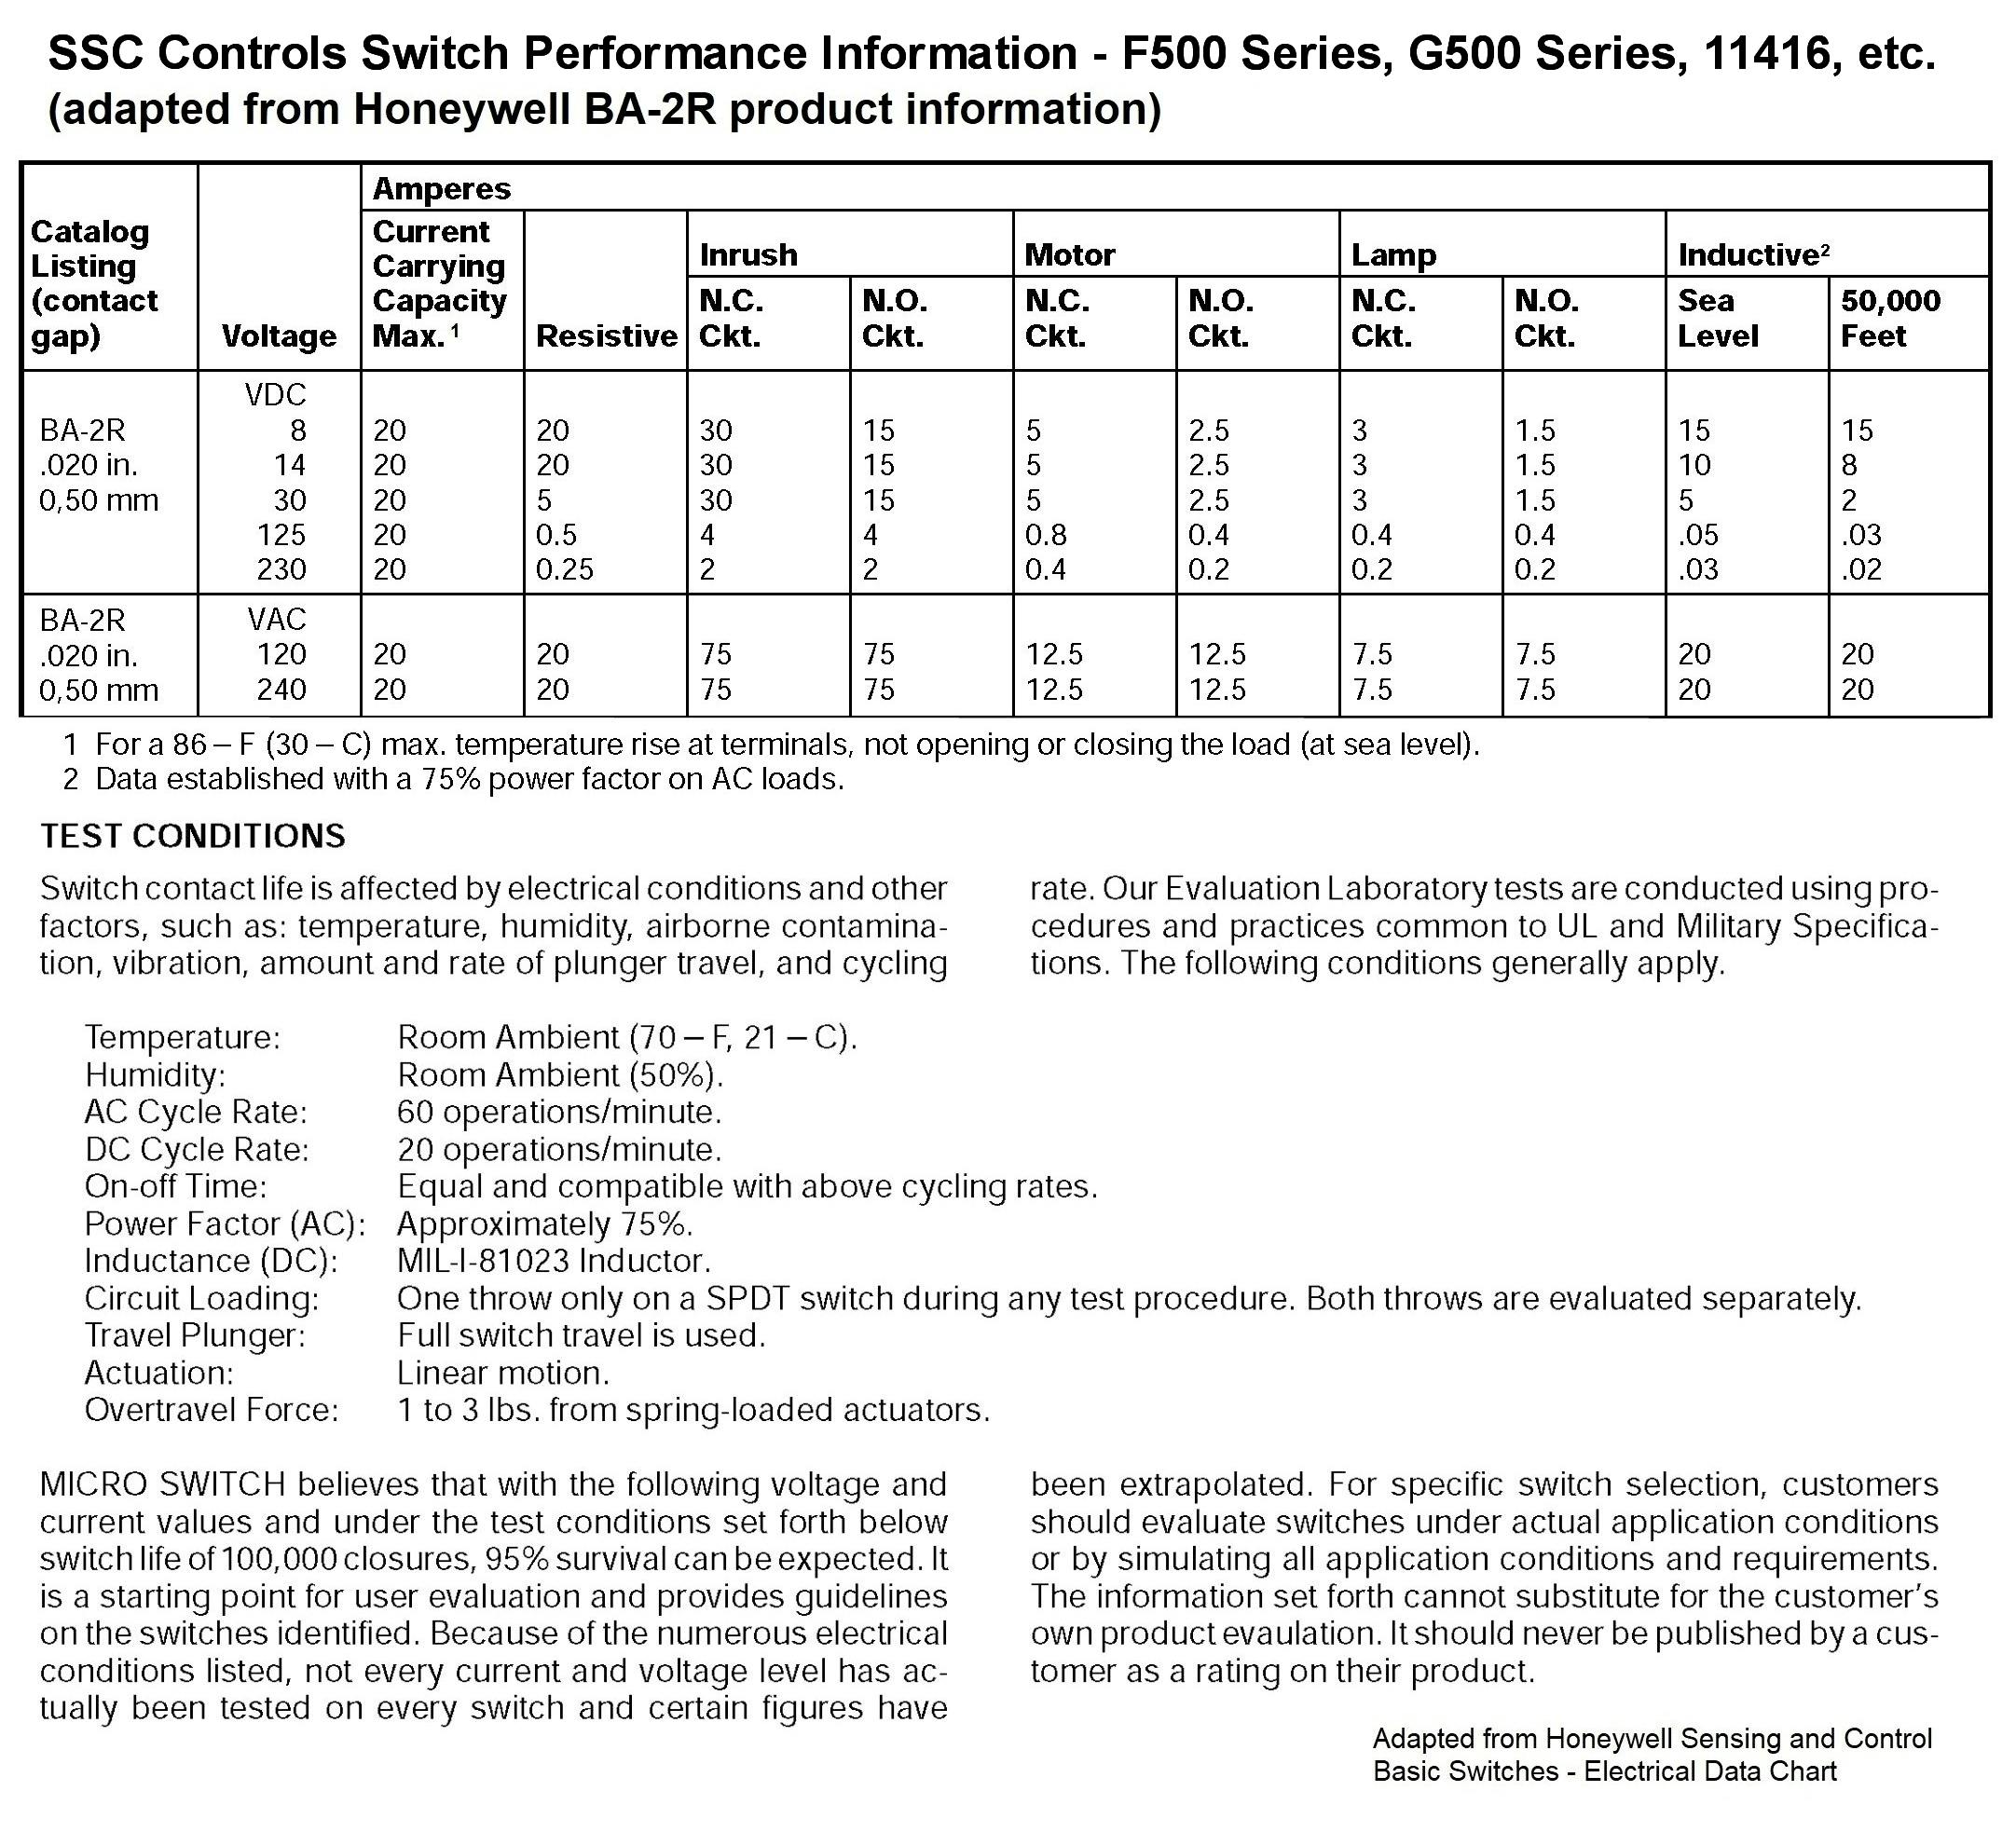 SSC Controls F500 Performance Information